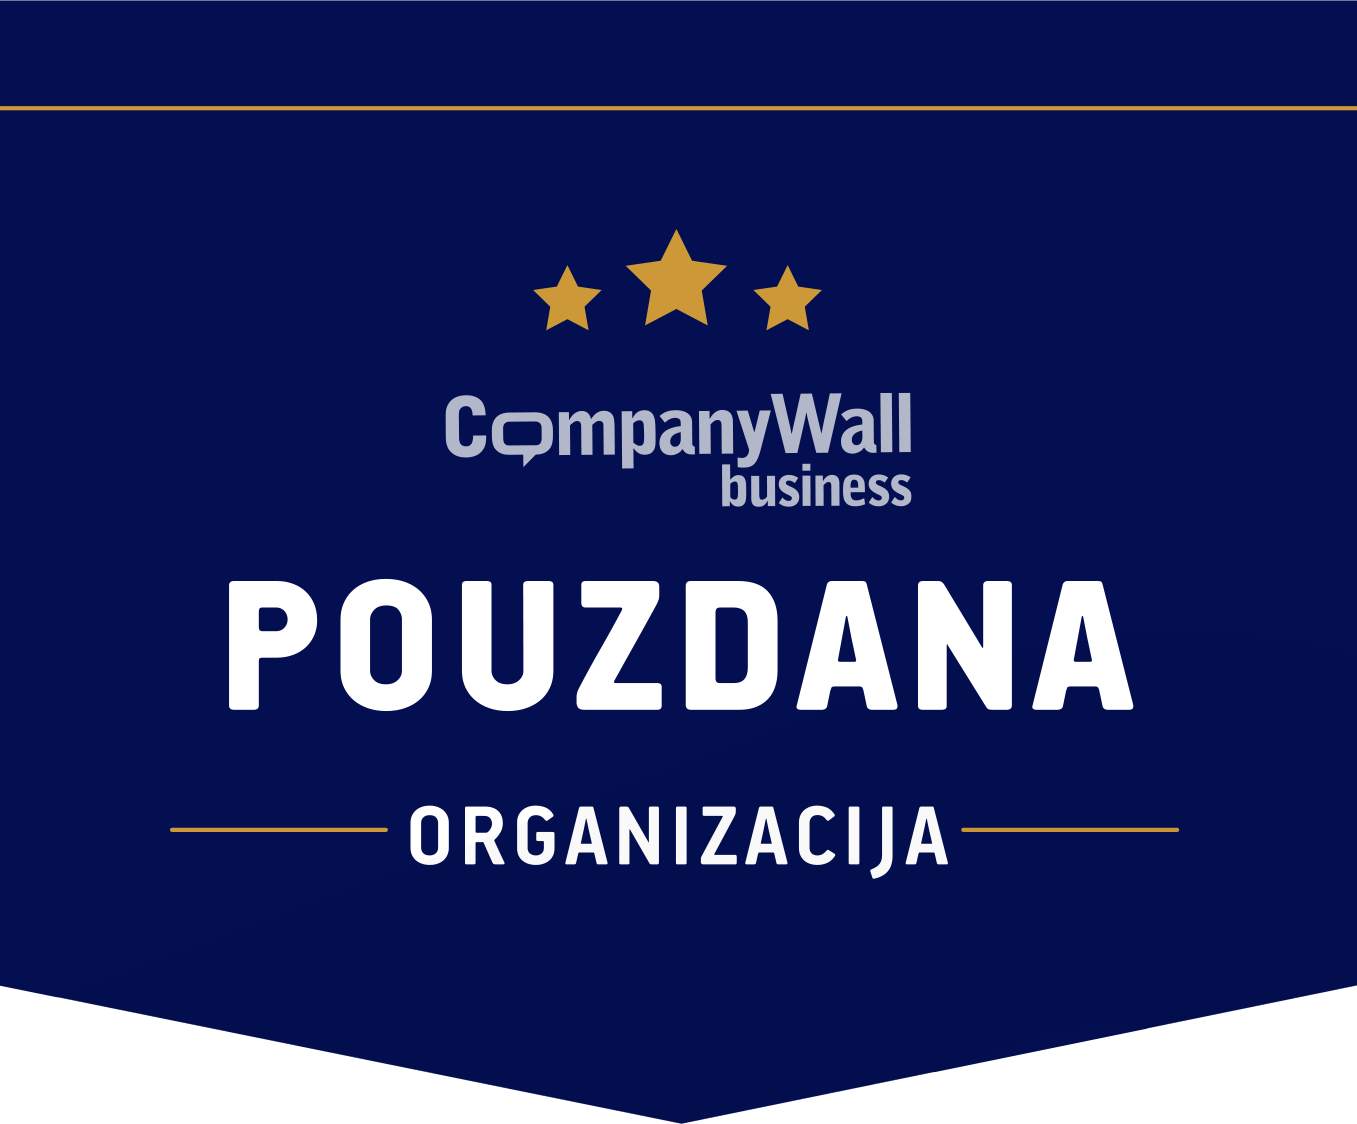 Company wall certificate